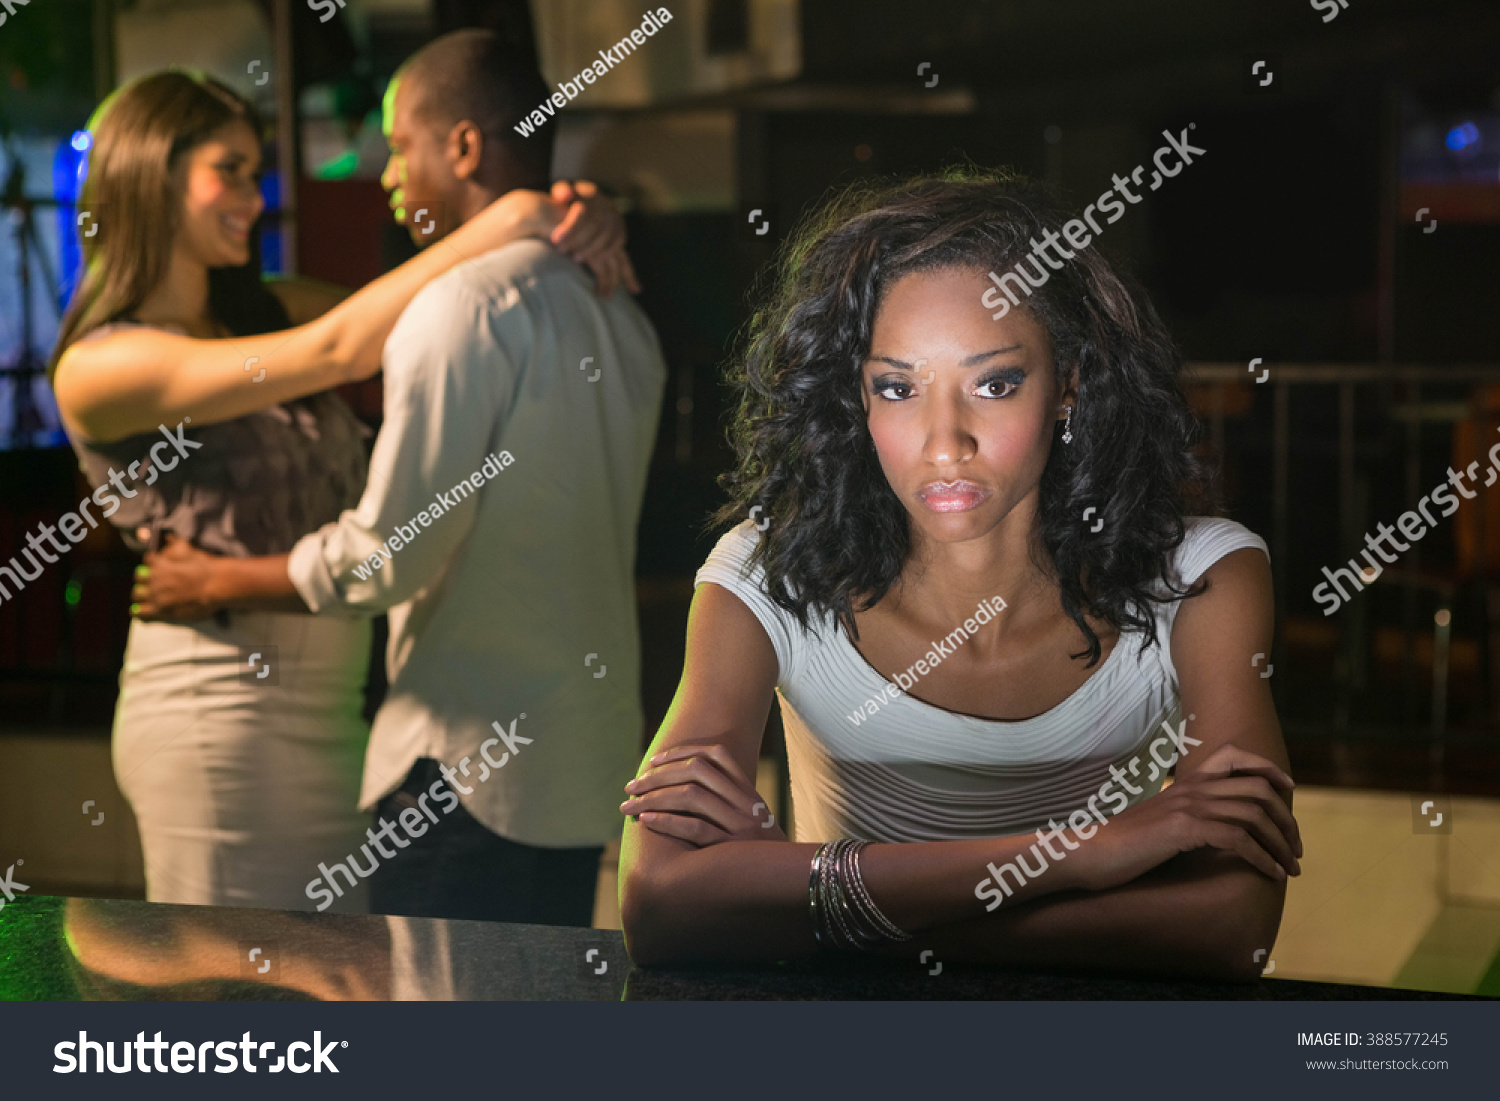 1,432 Black couple infidelity Images, Stock Photos & Vectors | Shutterstock